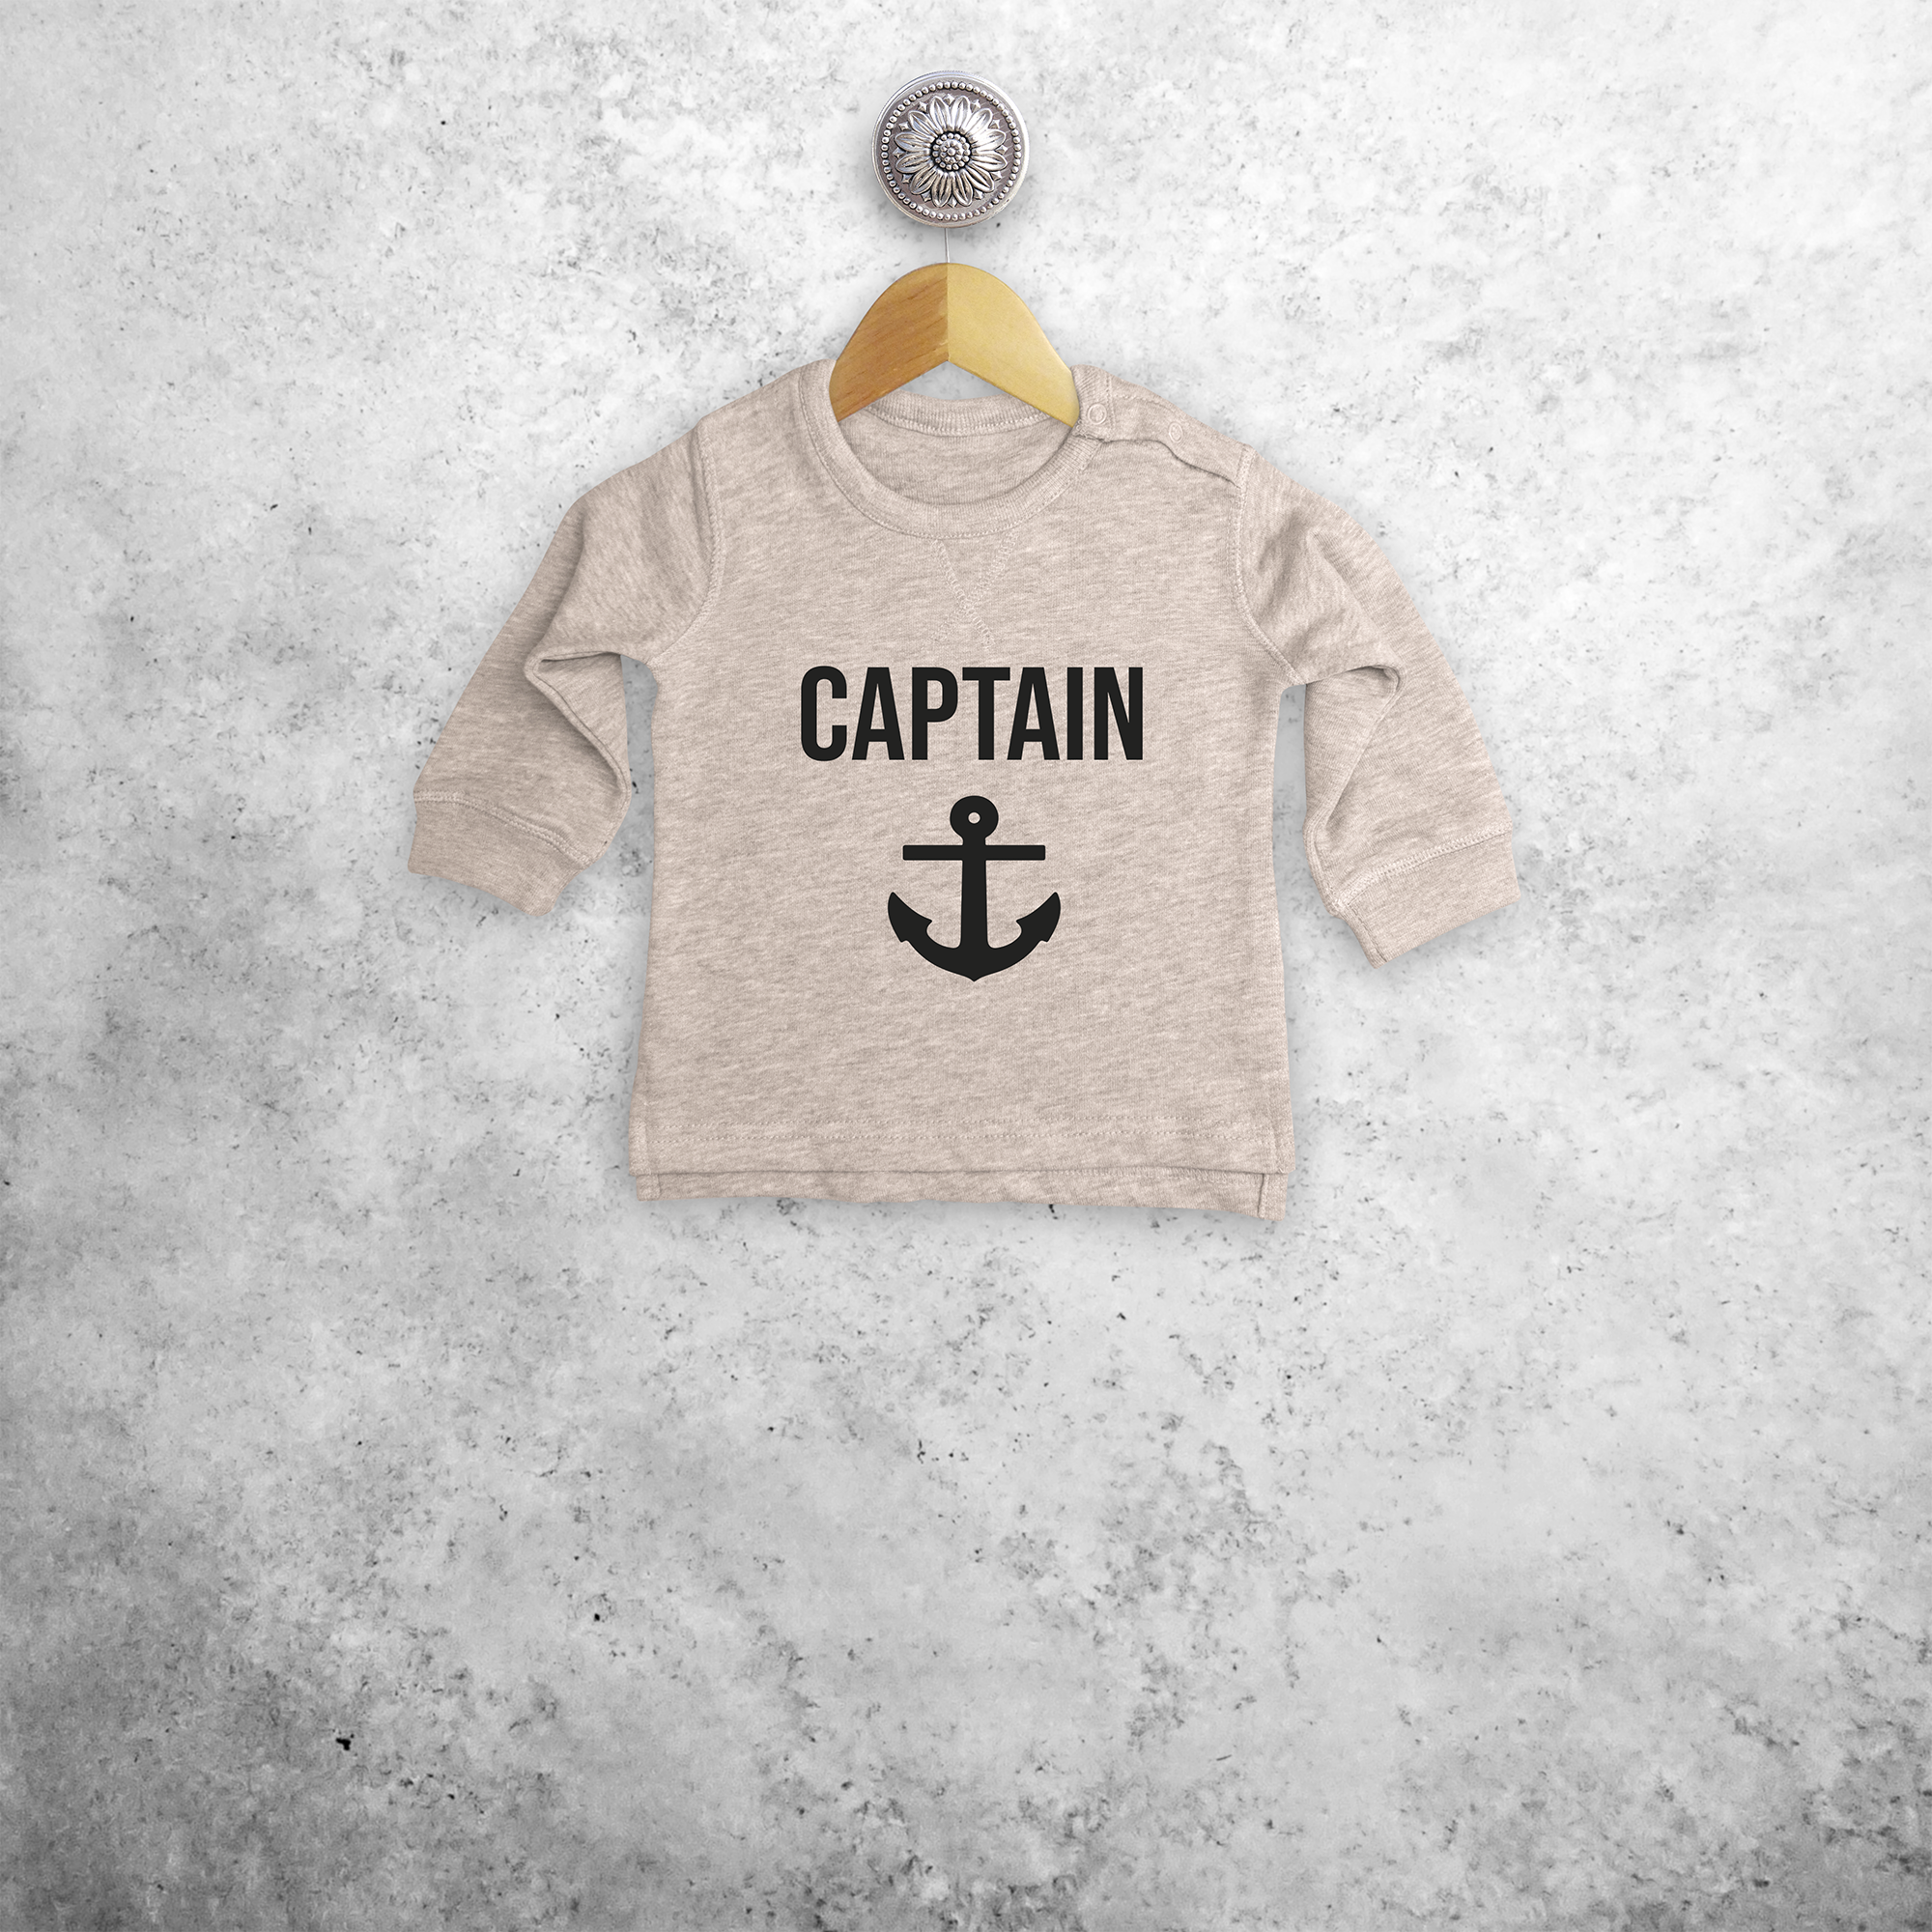 'Captain' baby trui